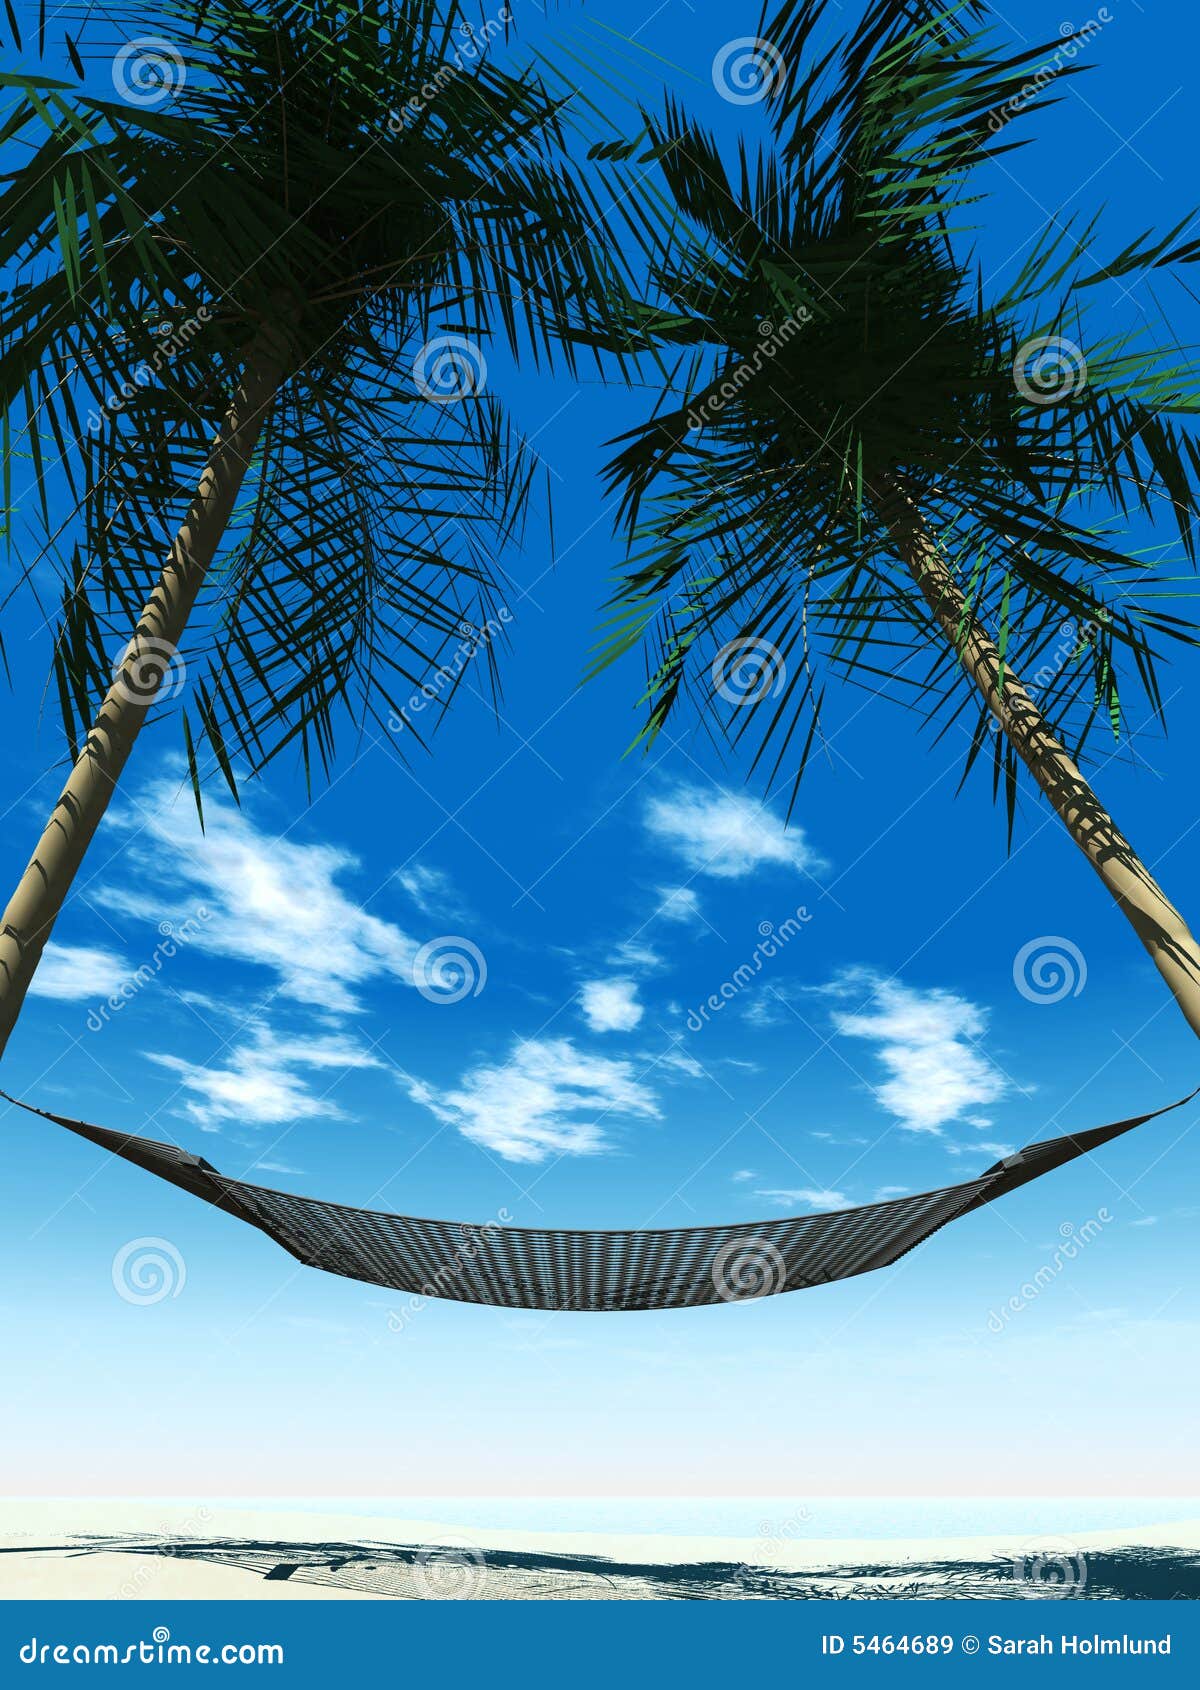 hammock between palmtrees